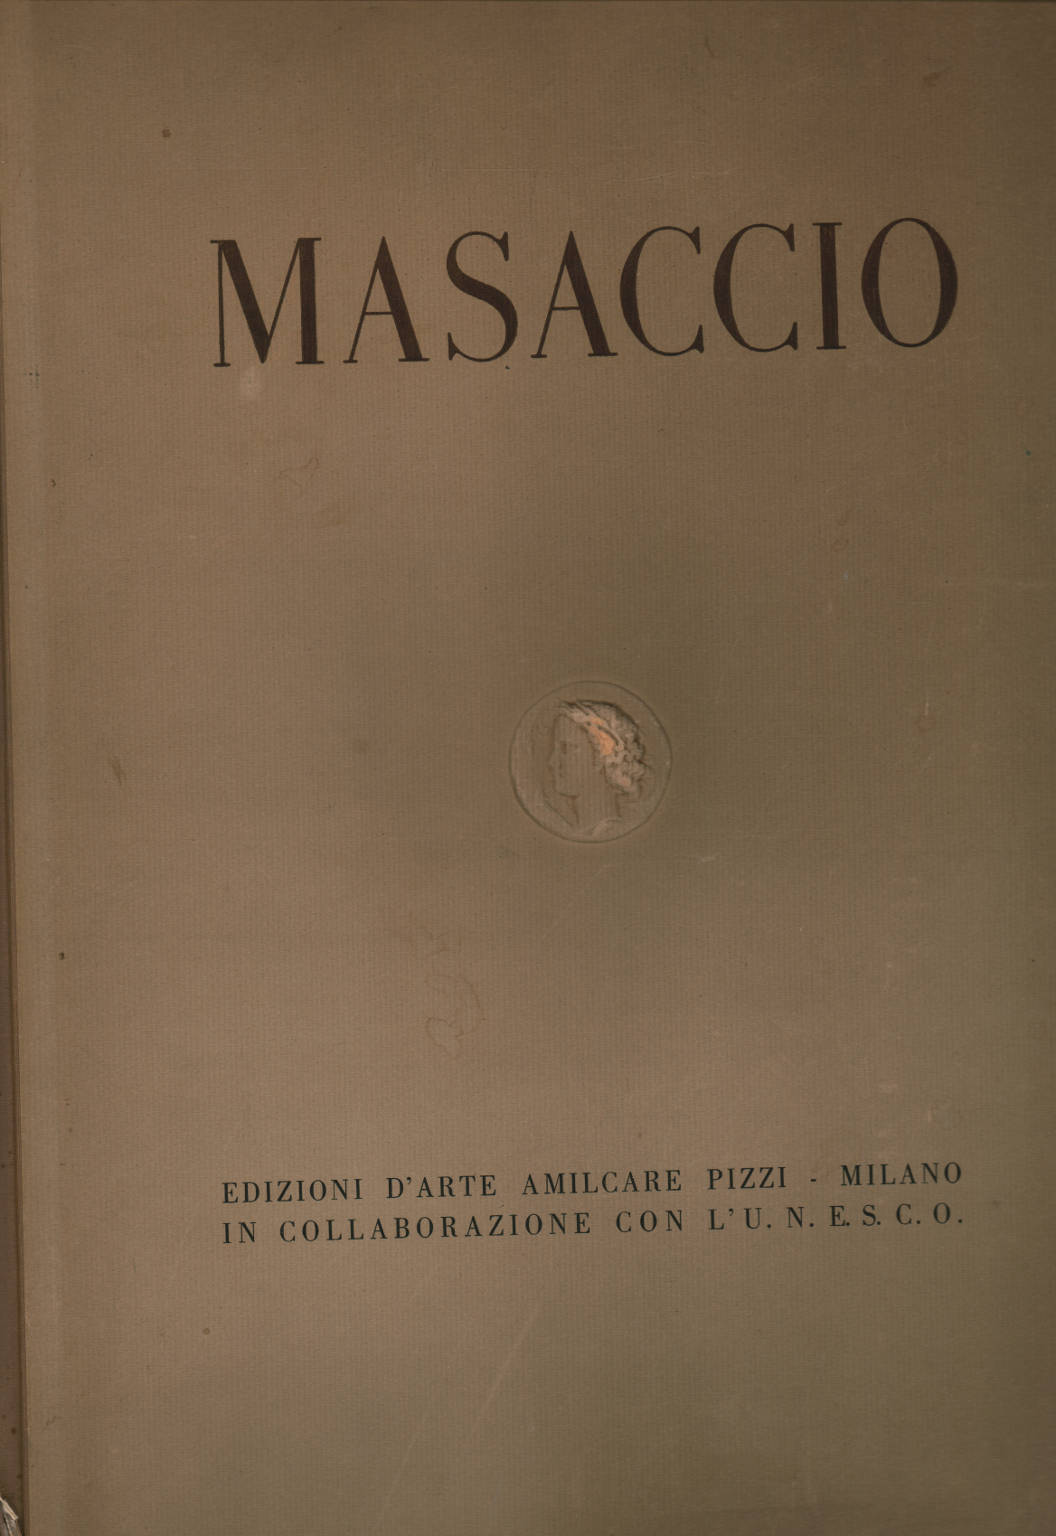 Masaccio: Brancacci Chapel - Church of S. Maria, Mario Salmi